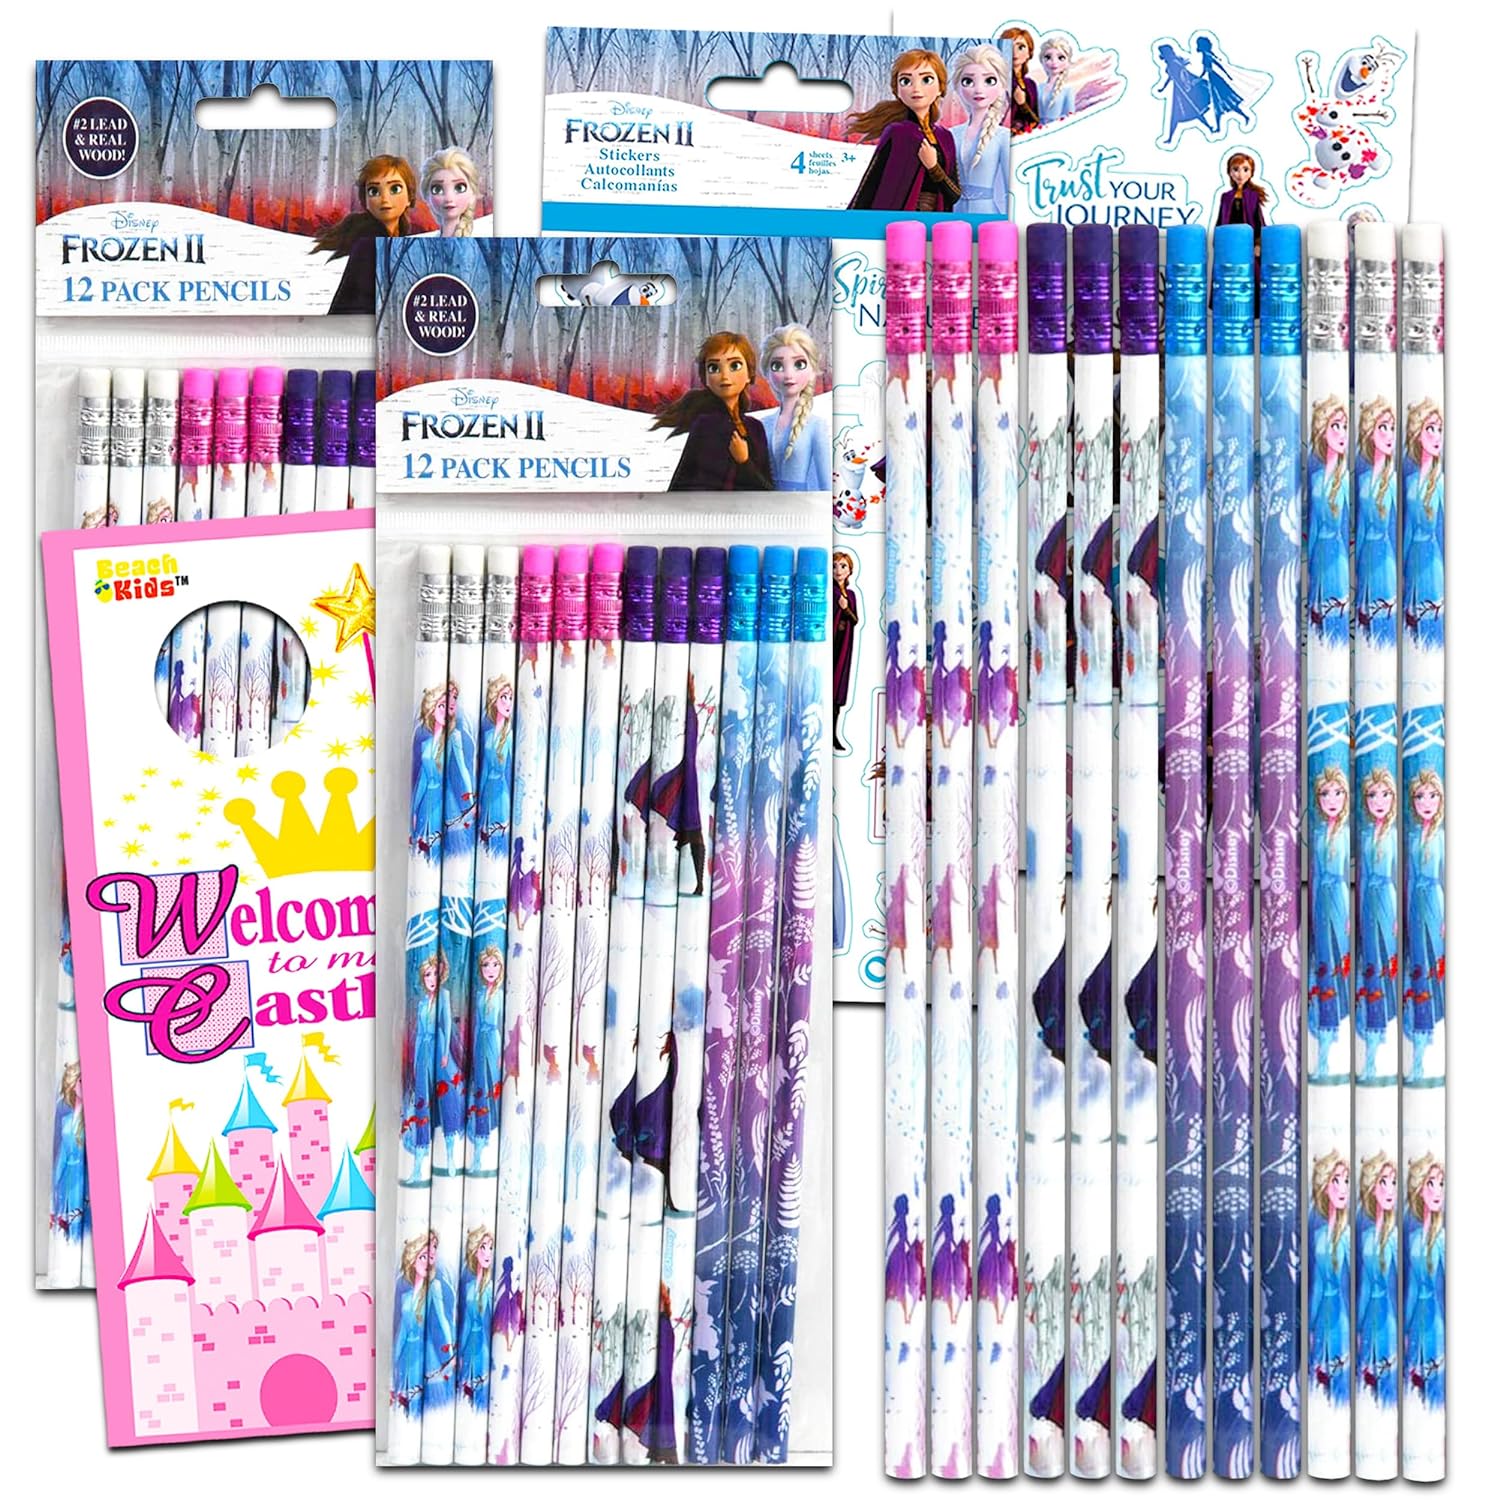 Great Choice Products Disney Frozen Pencils School Supplies Bundle - 24 Frozen 2 Pencils Featuring Anna And Elsa With Frozen Stickers (Frozen Pa